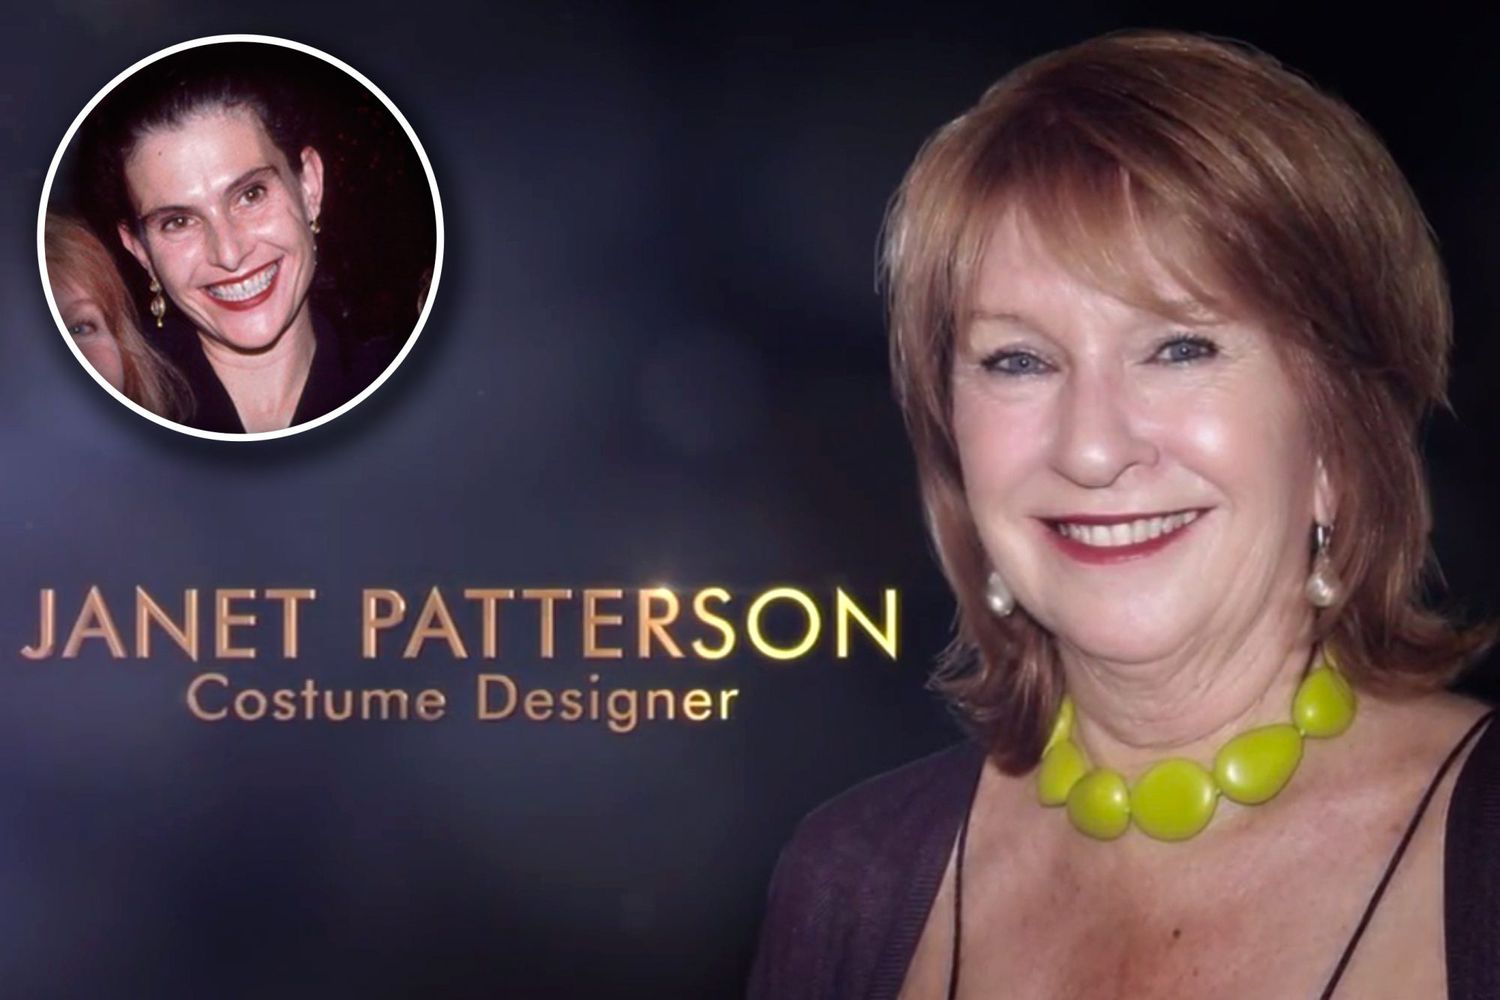 Janet Patterson